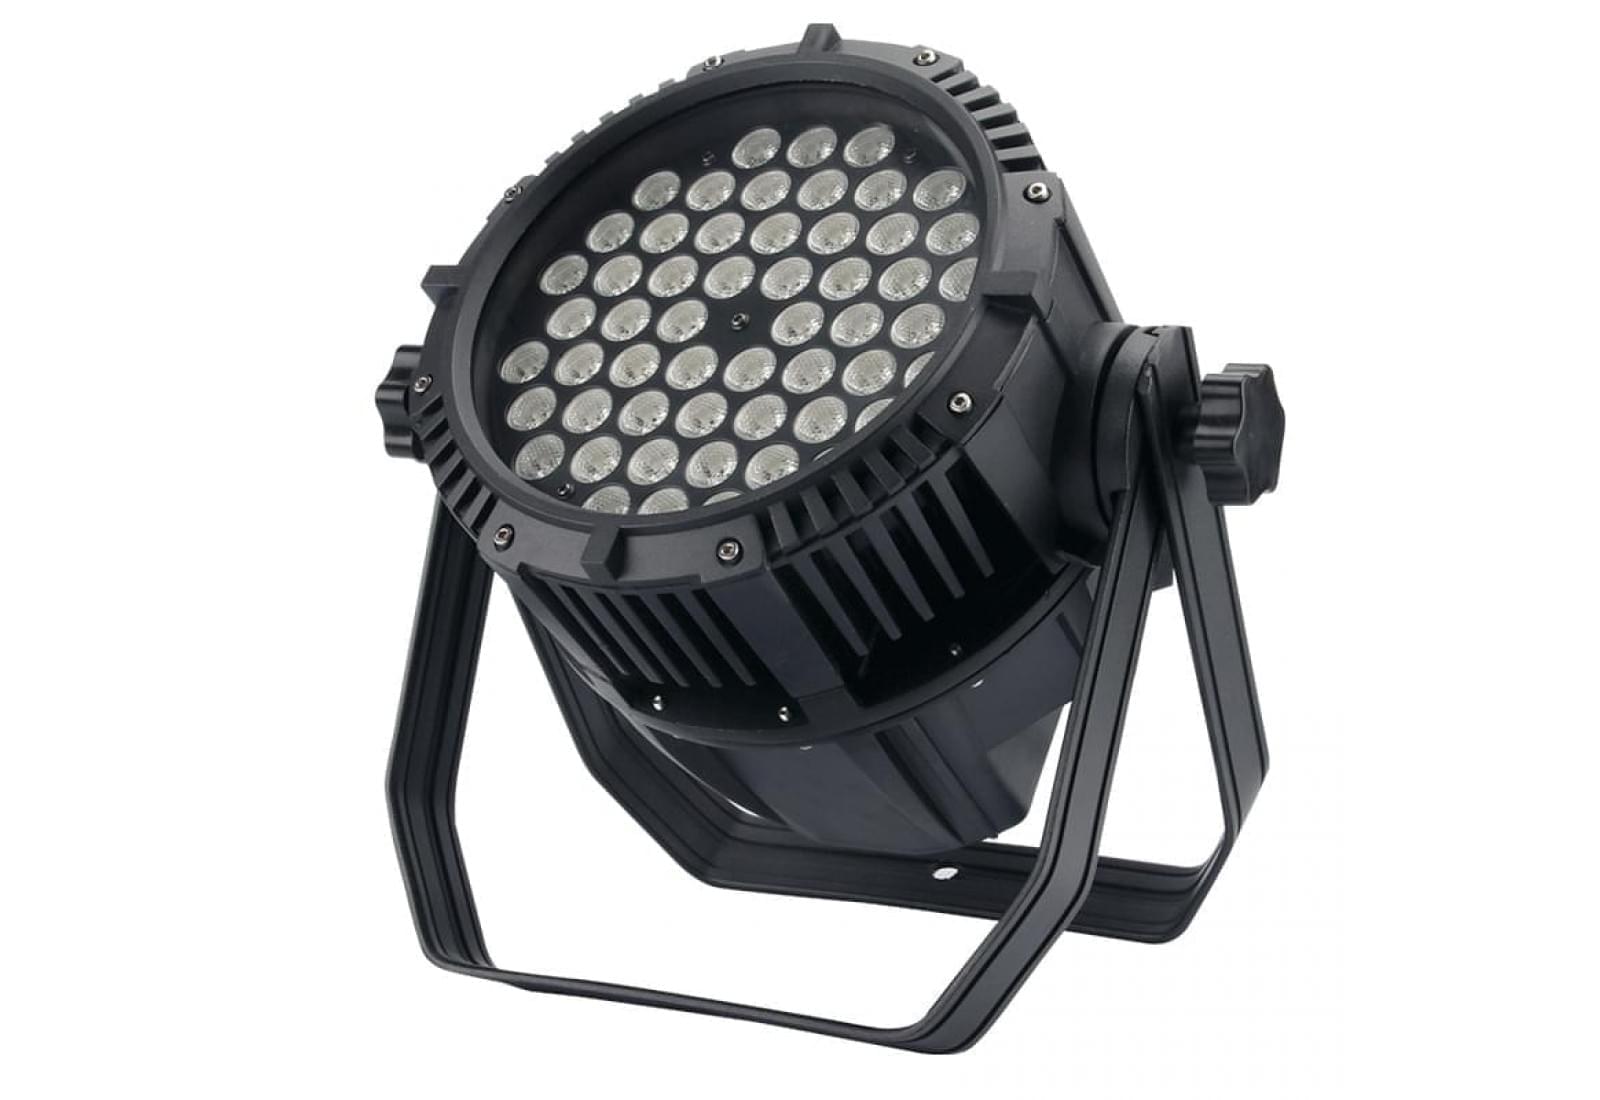 KZ-LED550 waterproof Par